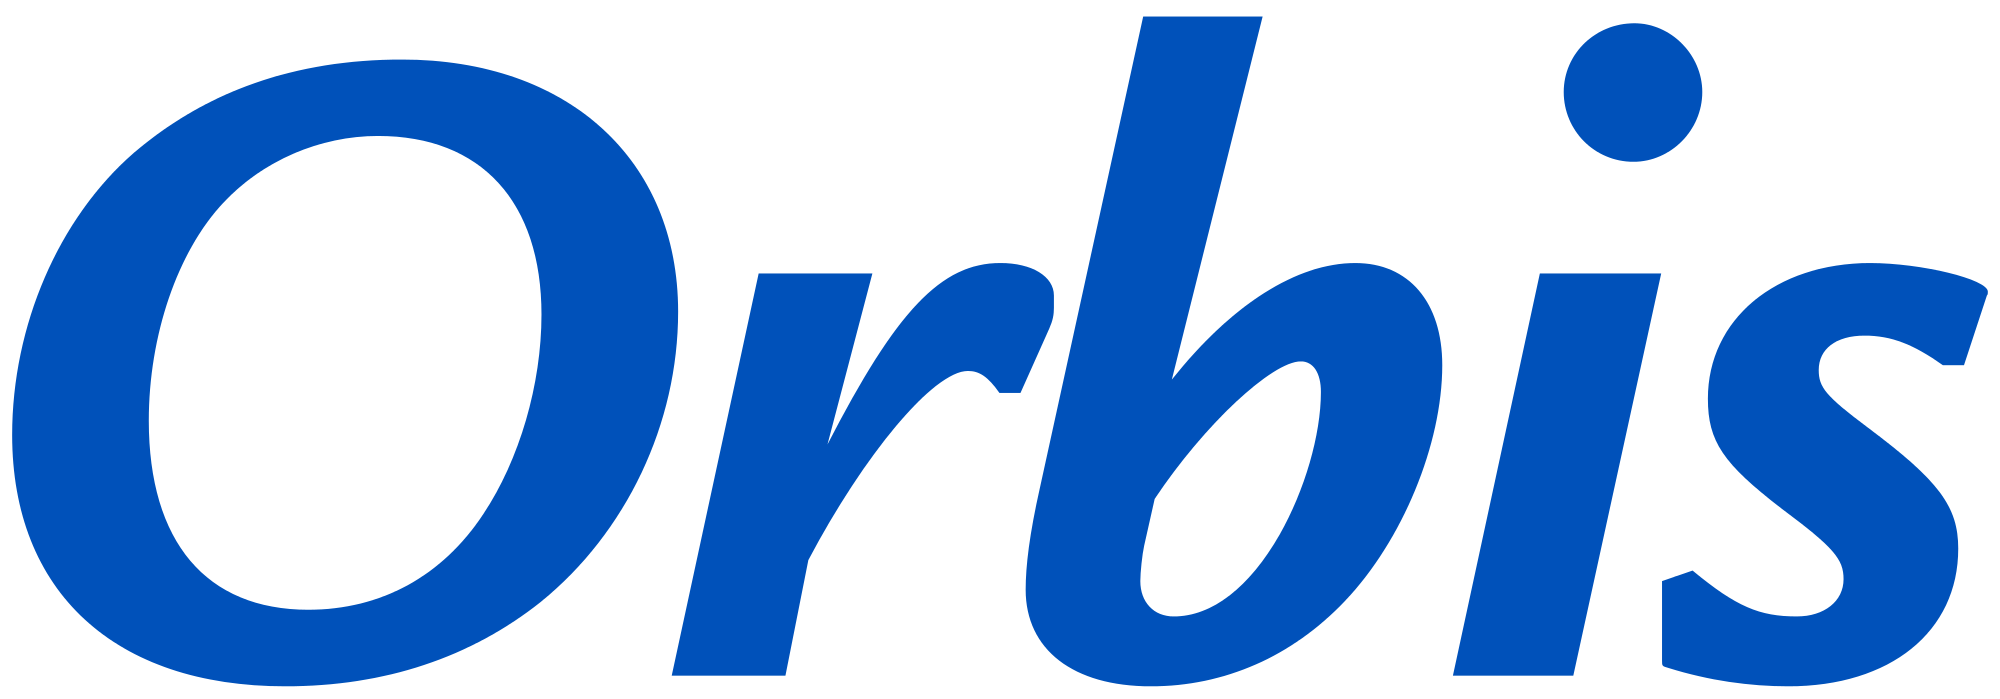 orbis-m3connect